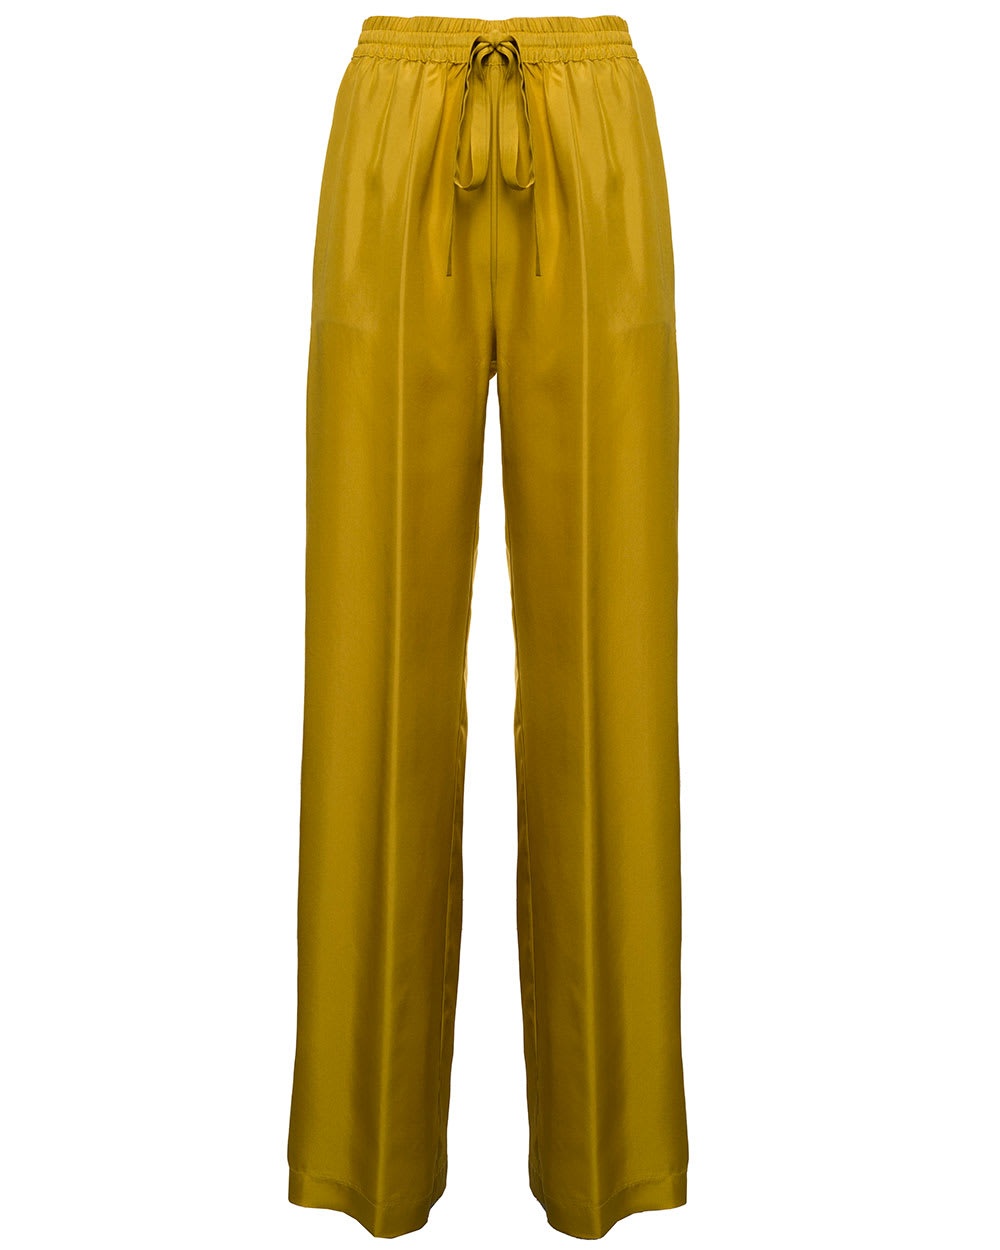 Cherice Womans Yellow Silk Semicouture Pants